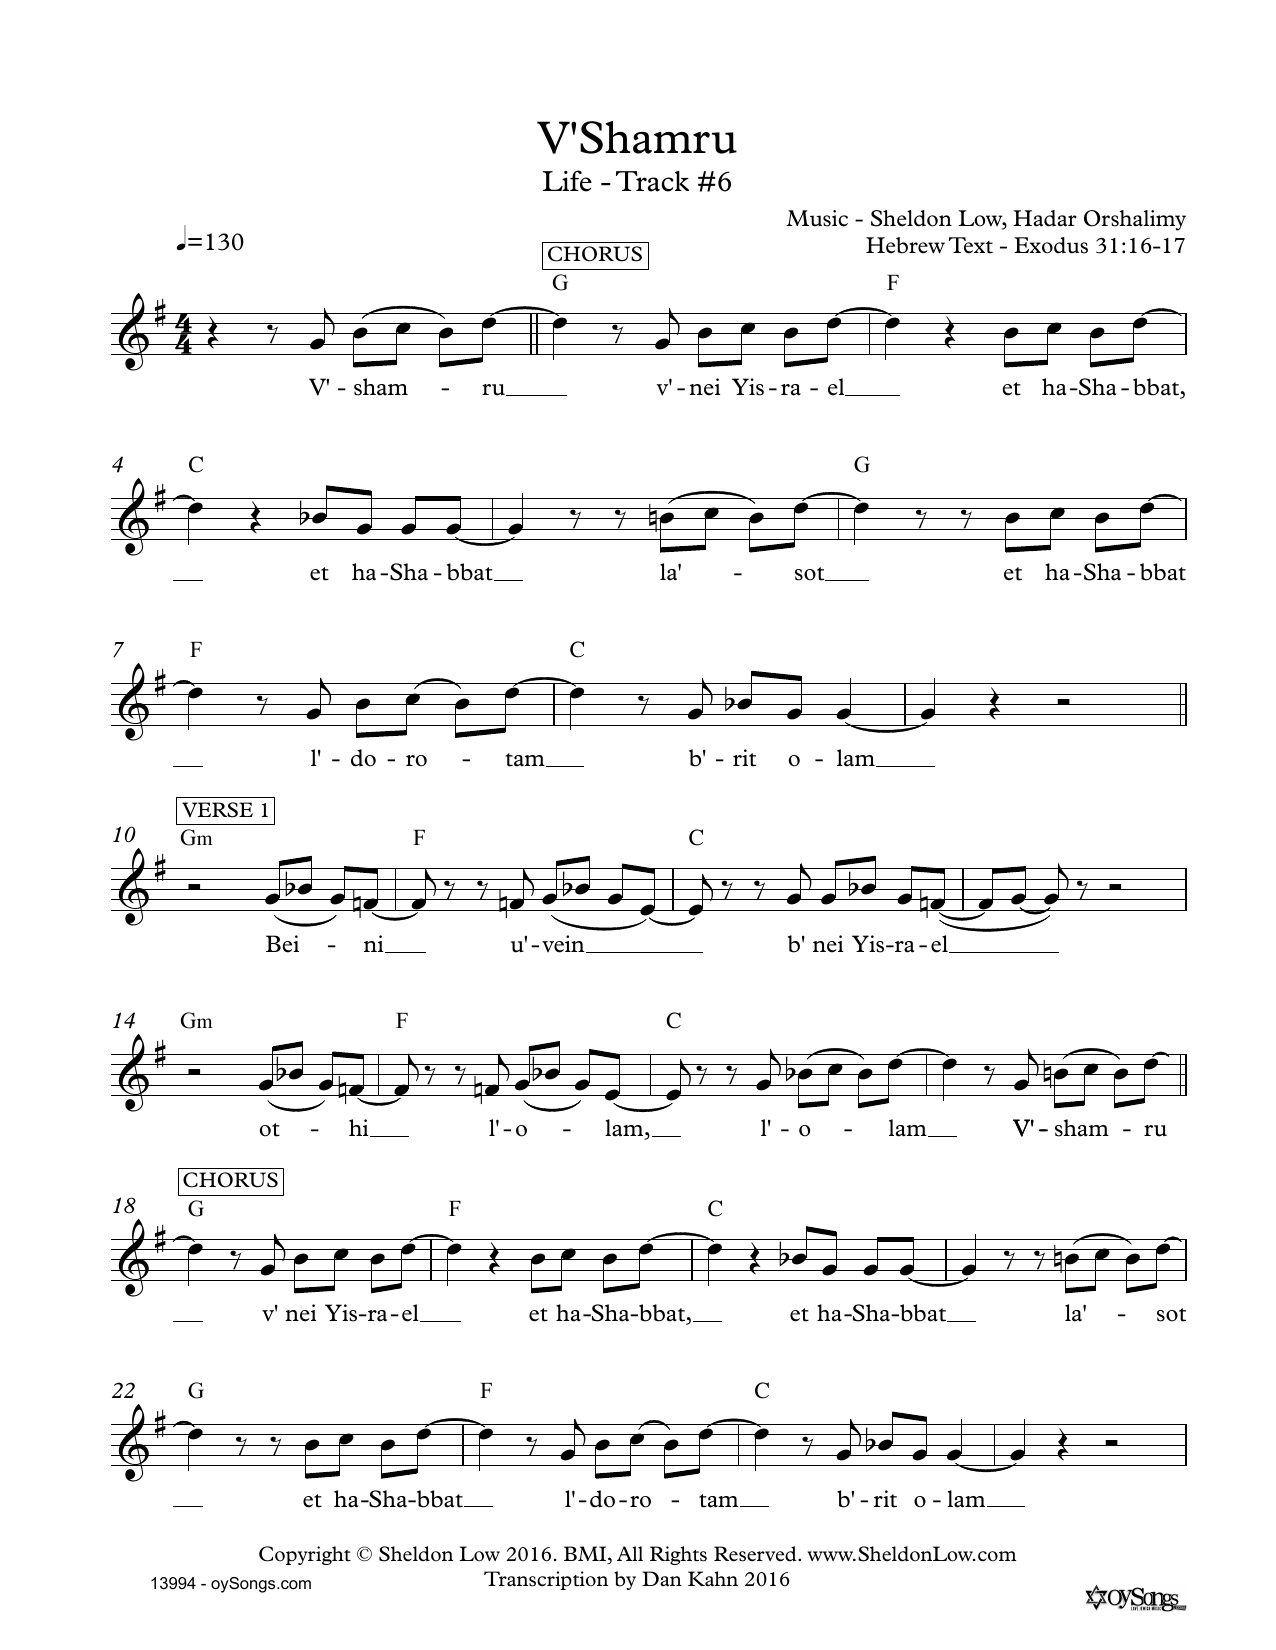 Sheldon Low V'shamru sheet music notes and chords arranged for Lead Sheet / Fake Book